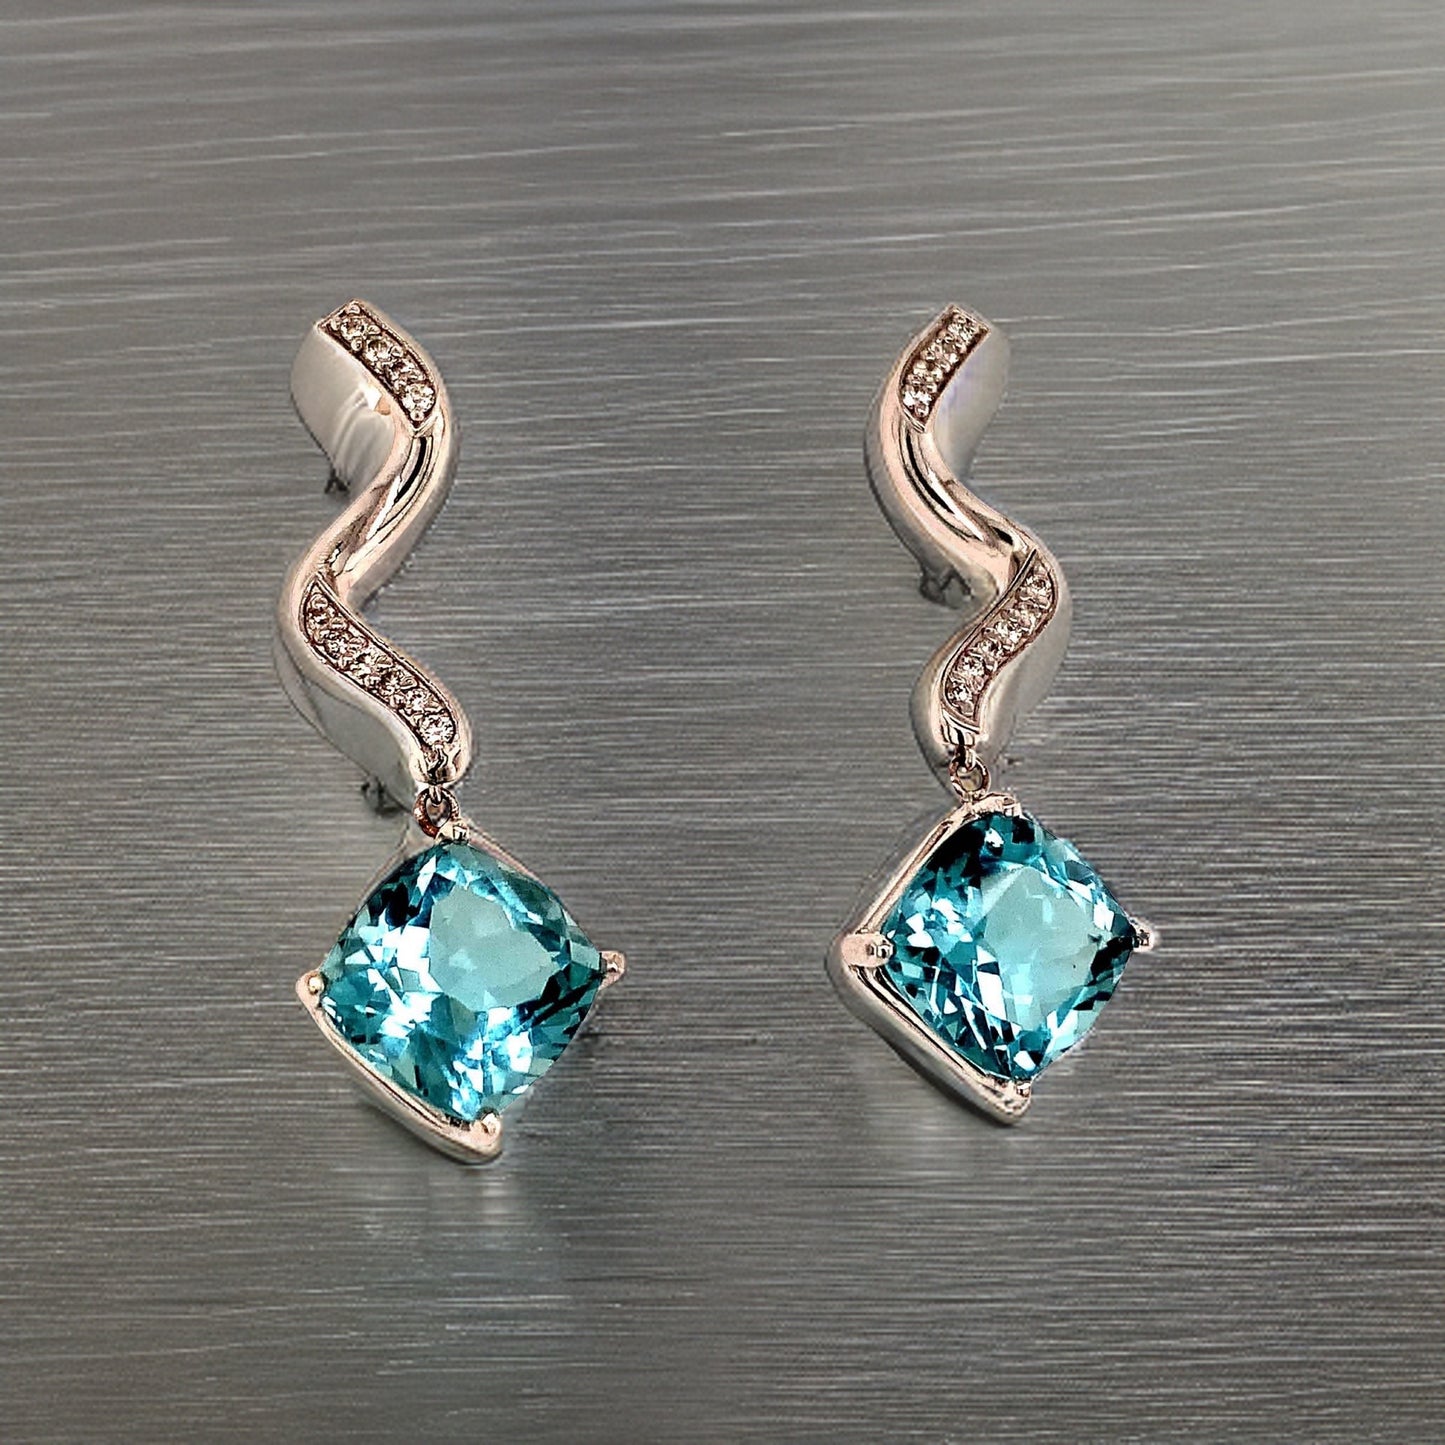 Natural Aquamarine Diamond Earrings 14k Gold 8.15 TCW Certified $4,950 111528